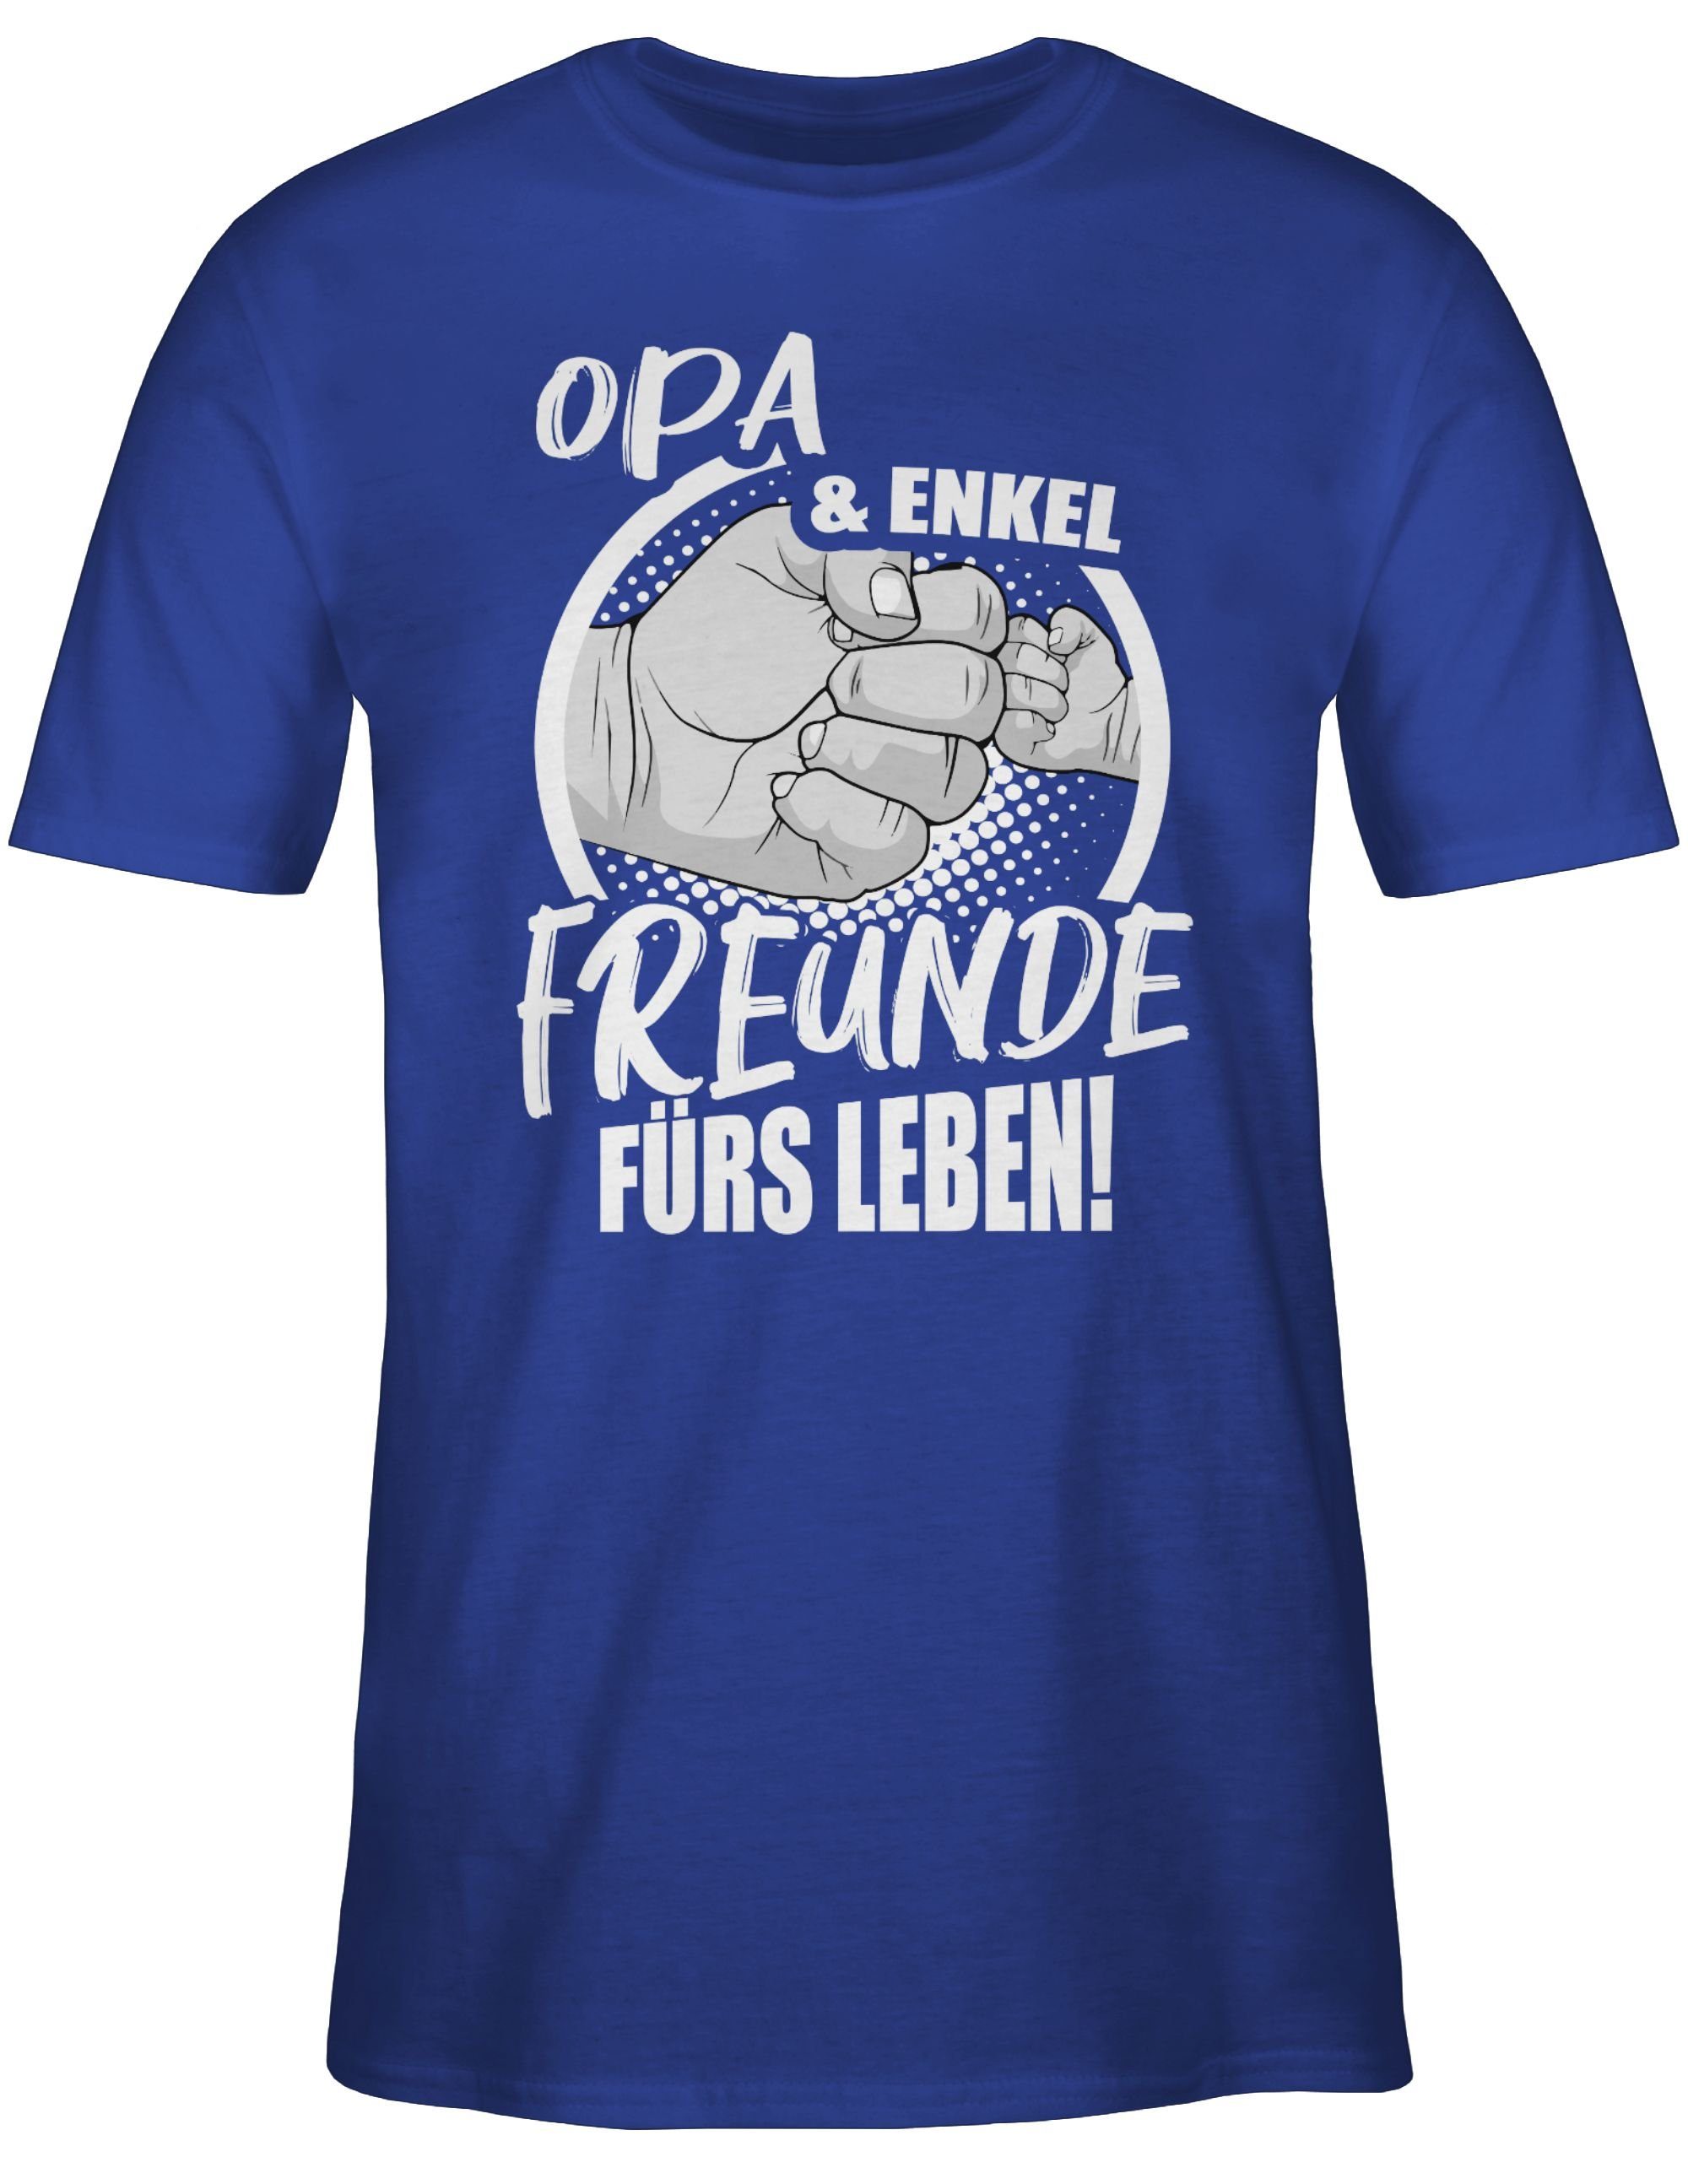 T-Shirt Leben! Geschenke Opa Enkel & fürs Freunde 3 Shirtracer Royalblau Opa